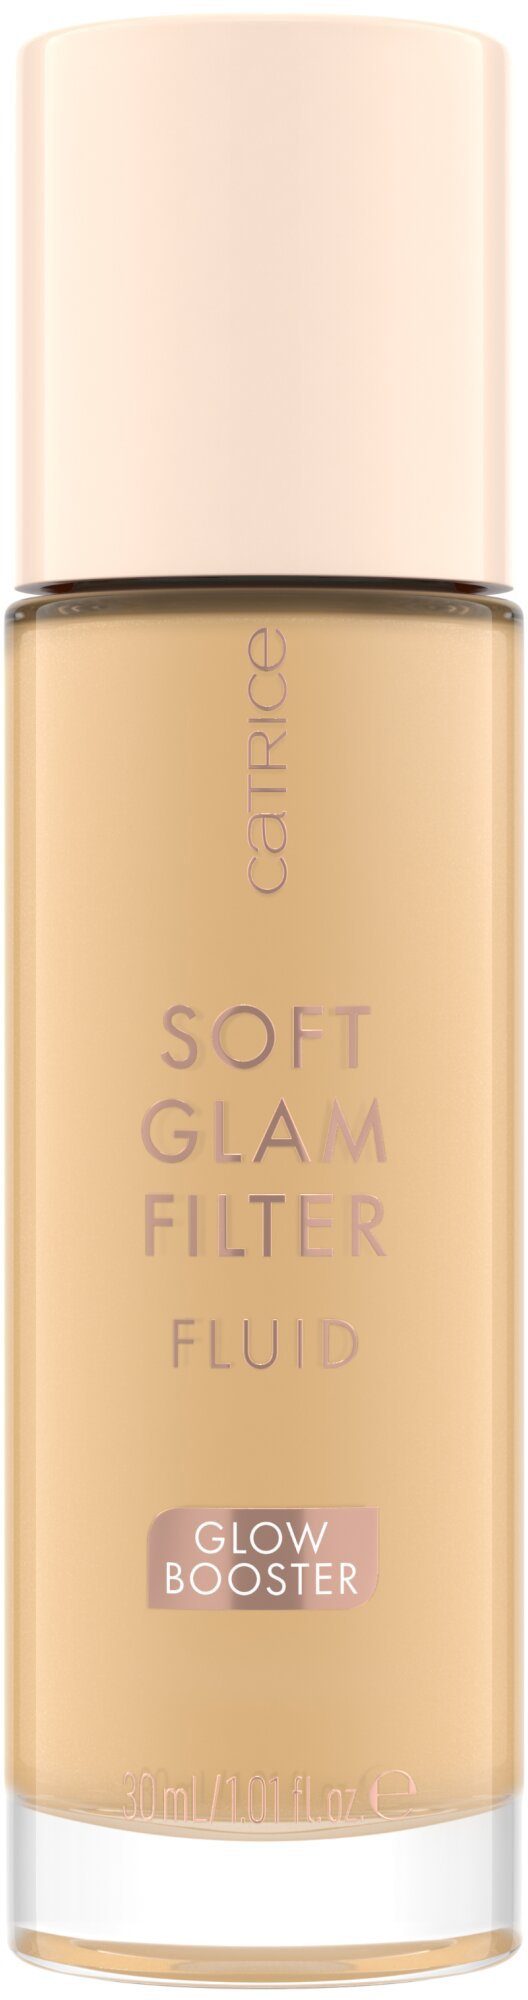 Filter Fluid Glam Soft Catrice Primer